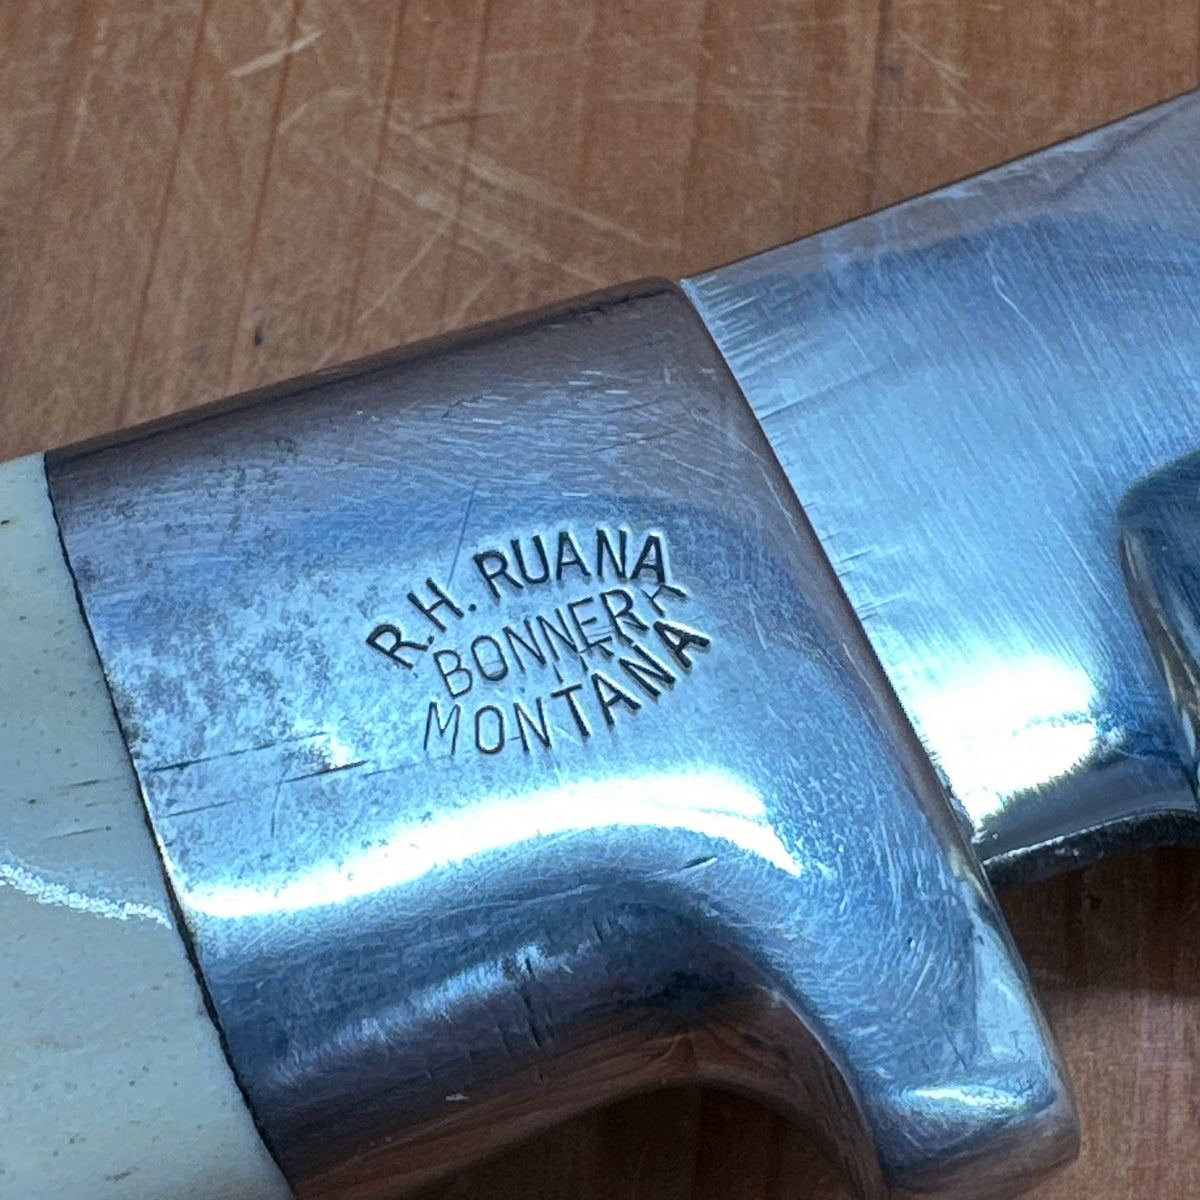 R H Ruana Model 15C Knife Bonner Montana 1943-44 All Original